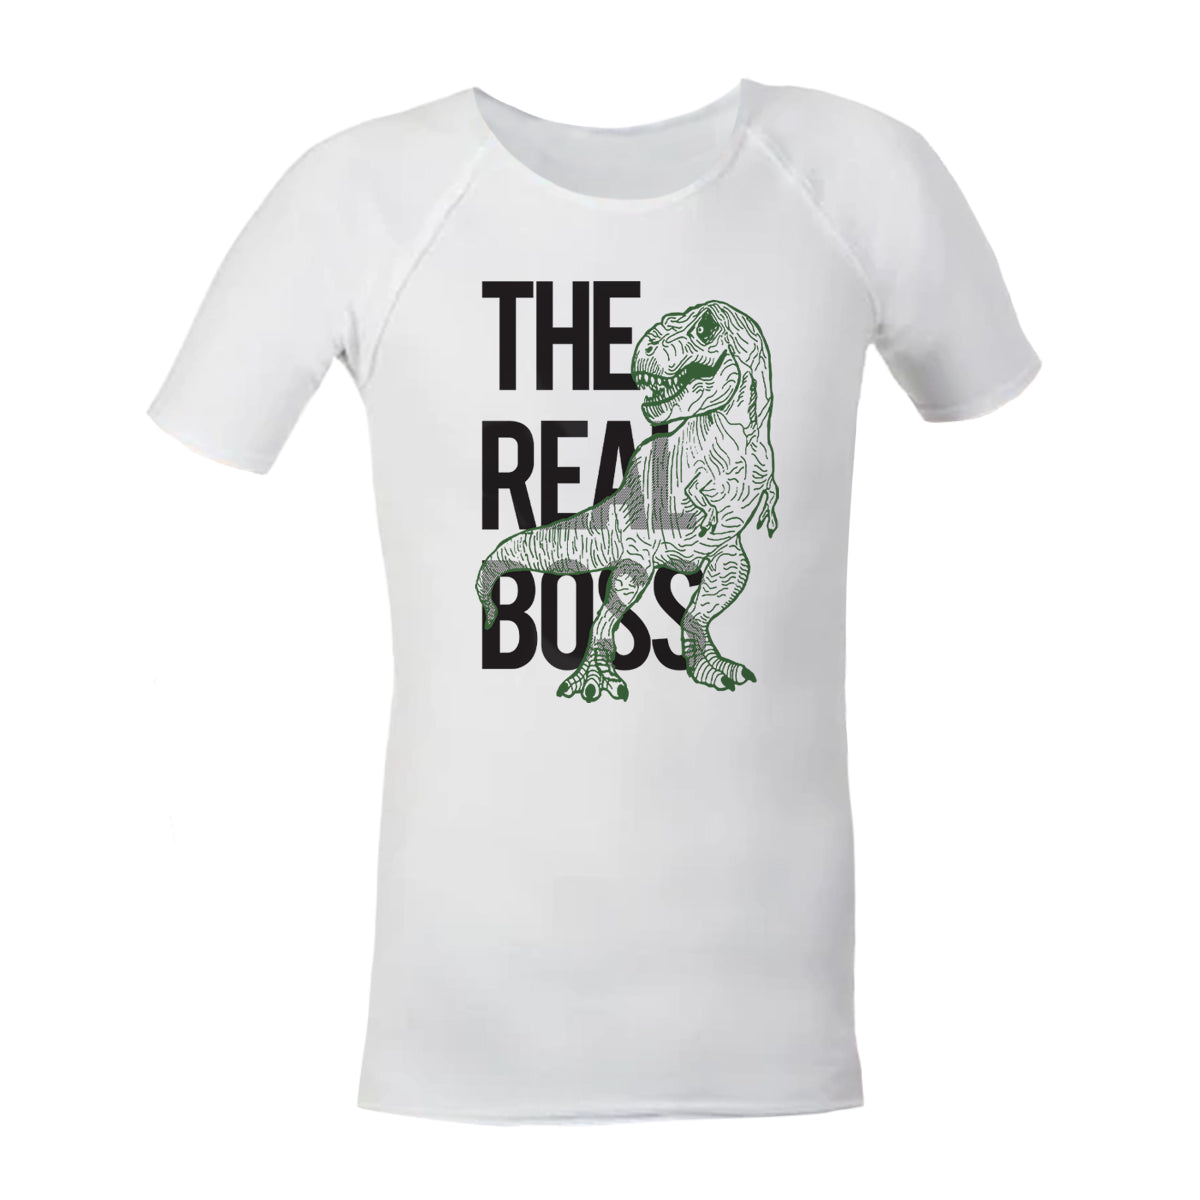 Sensory Shirt | Adult | The Real Boss